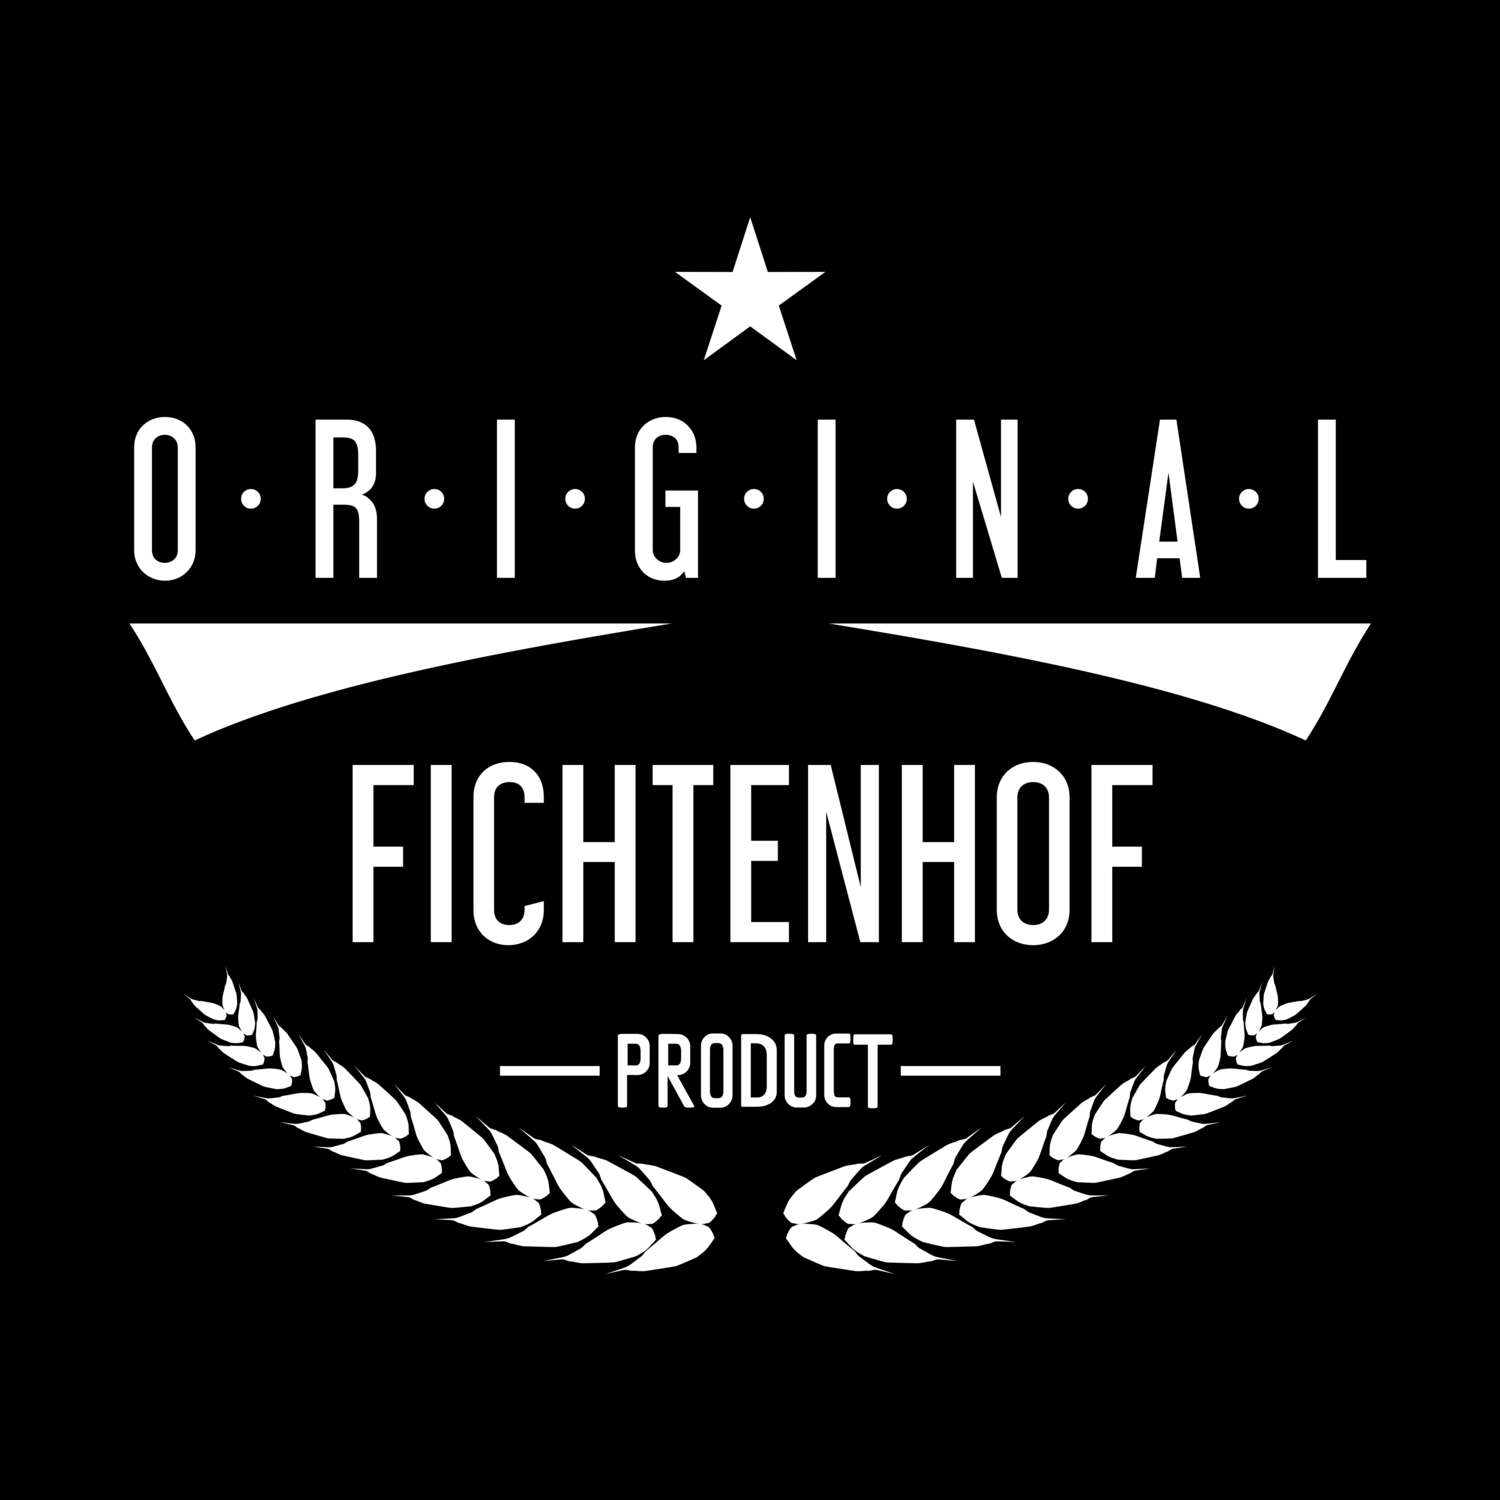 Fichtenhof T-Shirt »Original Product«